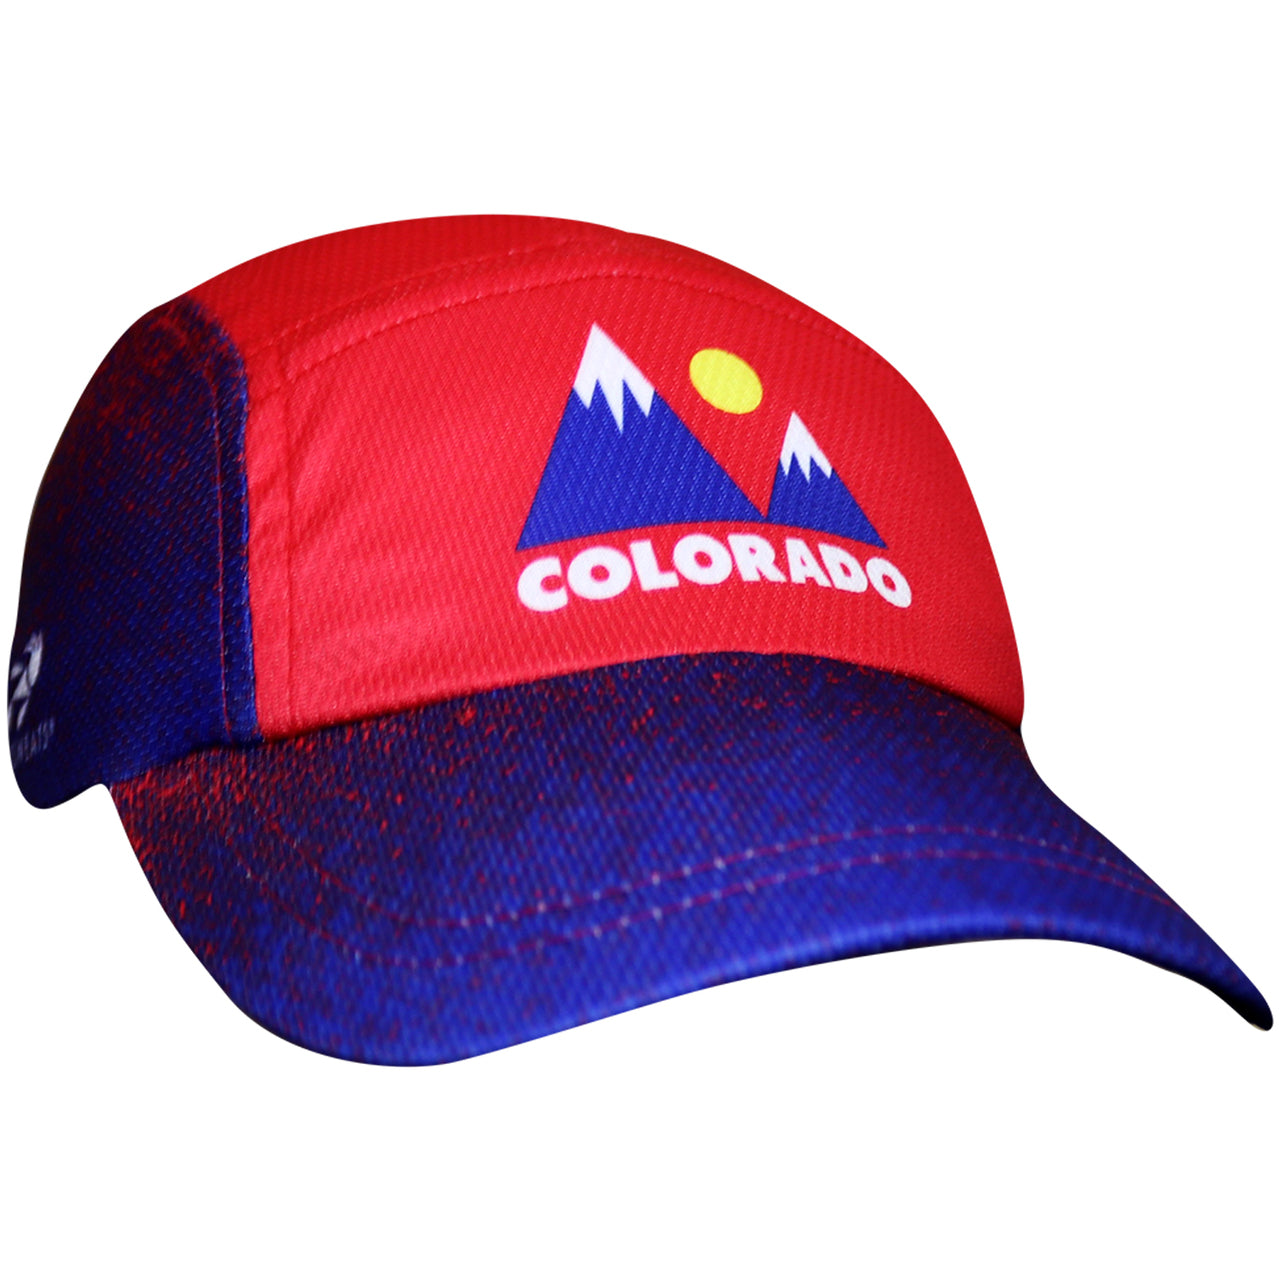 Race Hat | Colorado 14er-Headsweats